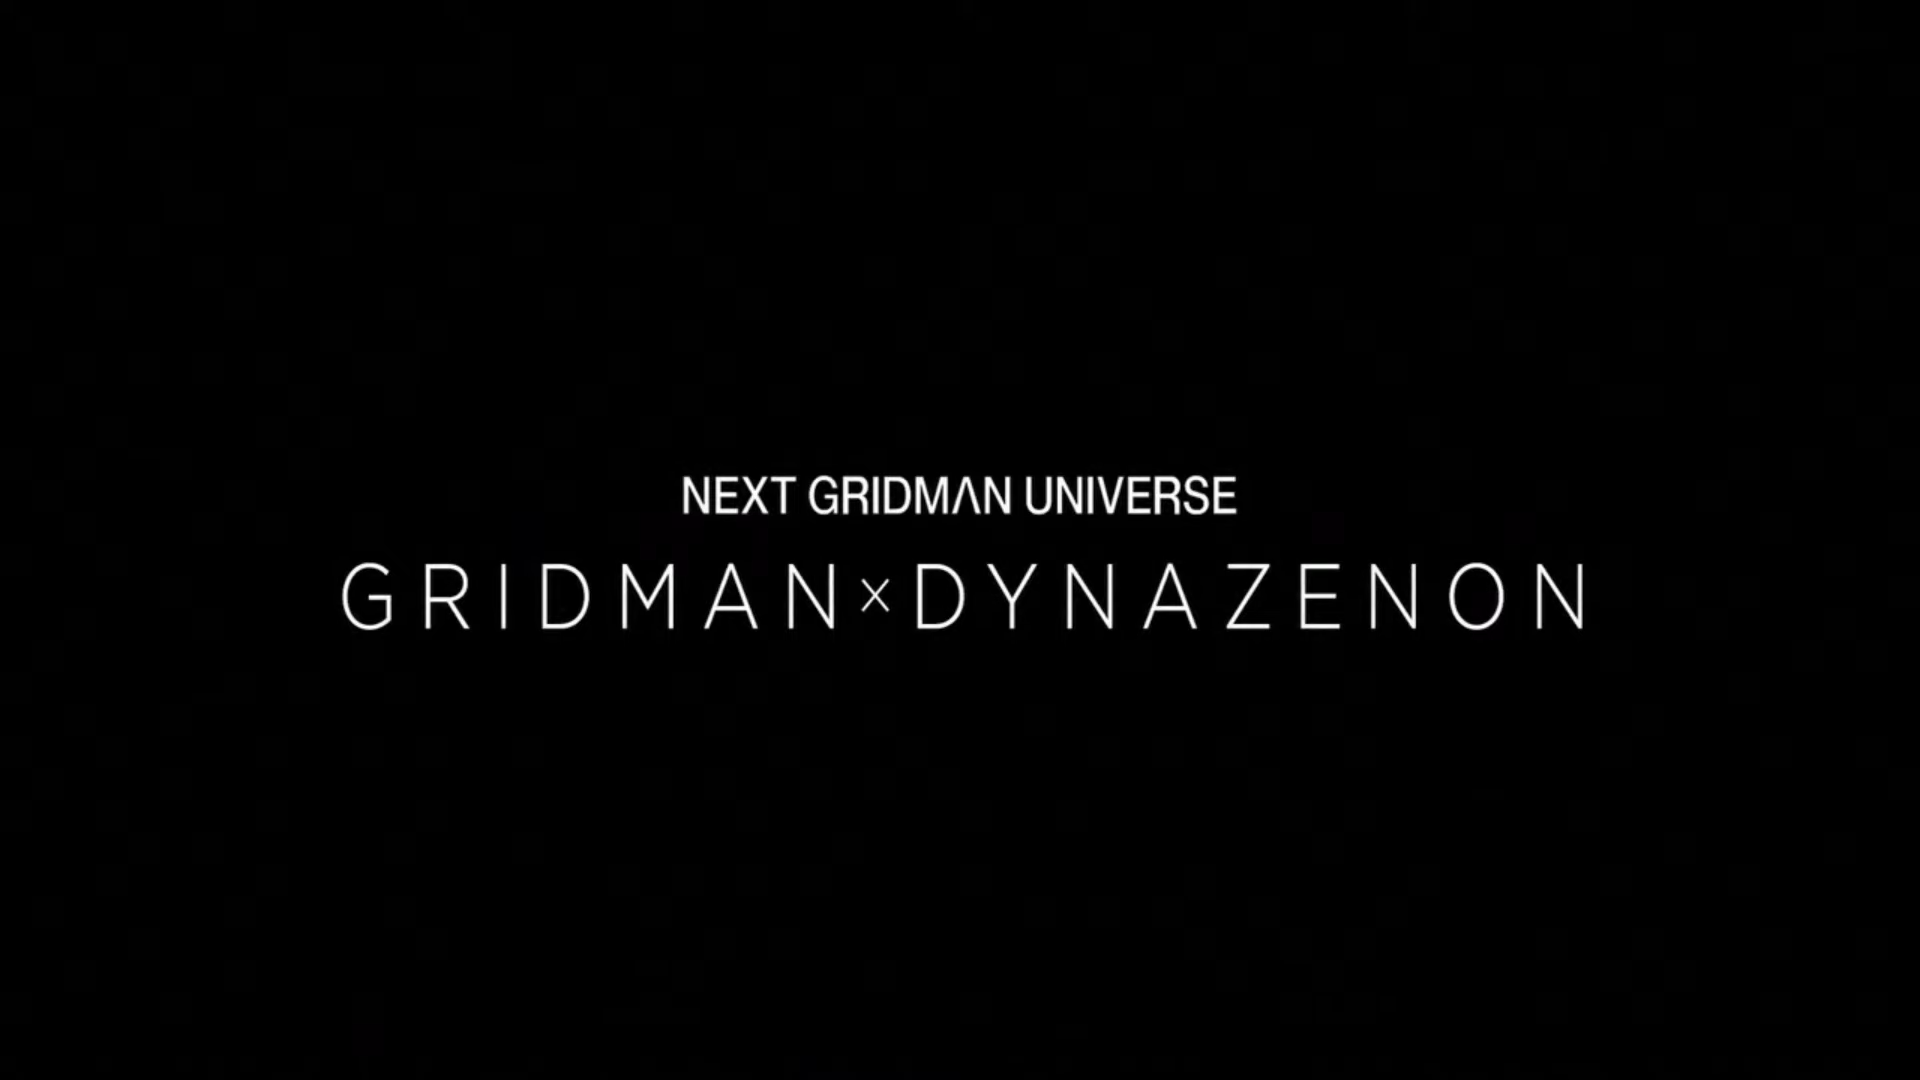 Gridman universe